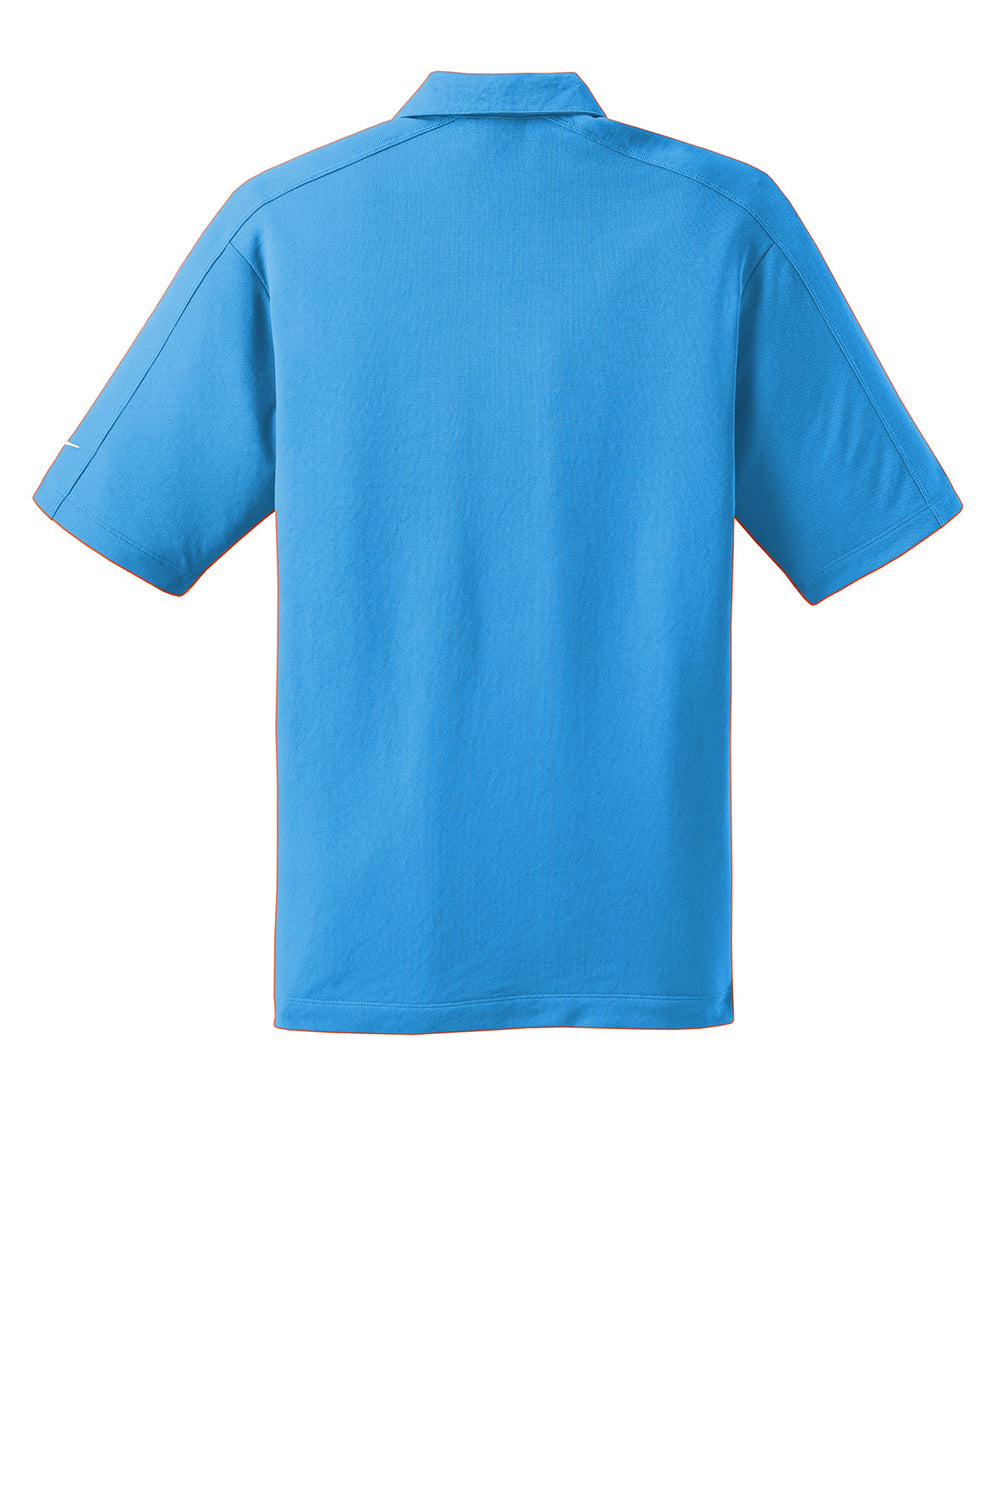 Nike 266998 Mens Tech Sport Dri-Fit Moisture Wicking Short Sleeve Polo Shirt Pacific Blue Flat Back